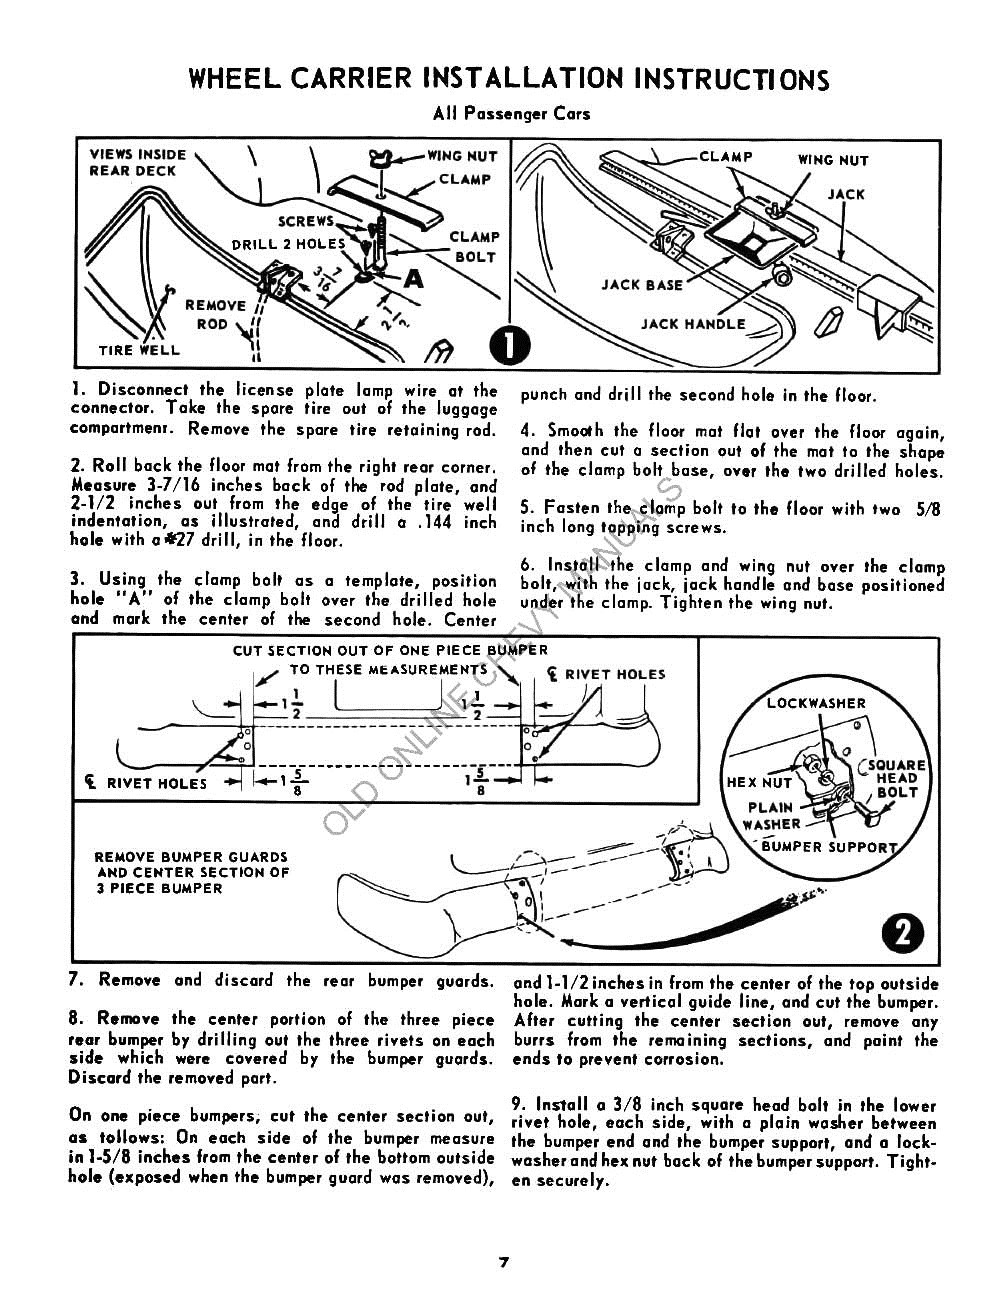 1955_Chevrolet_Acc_Manual-07